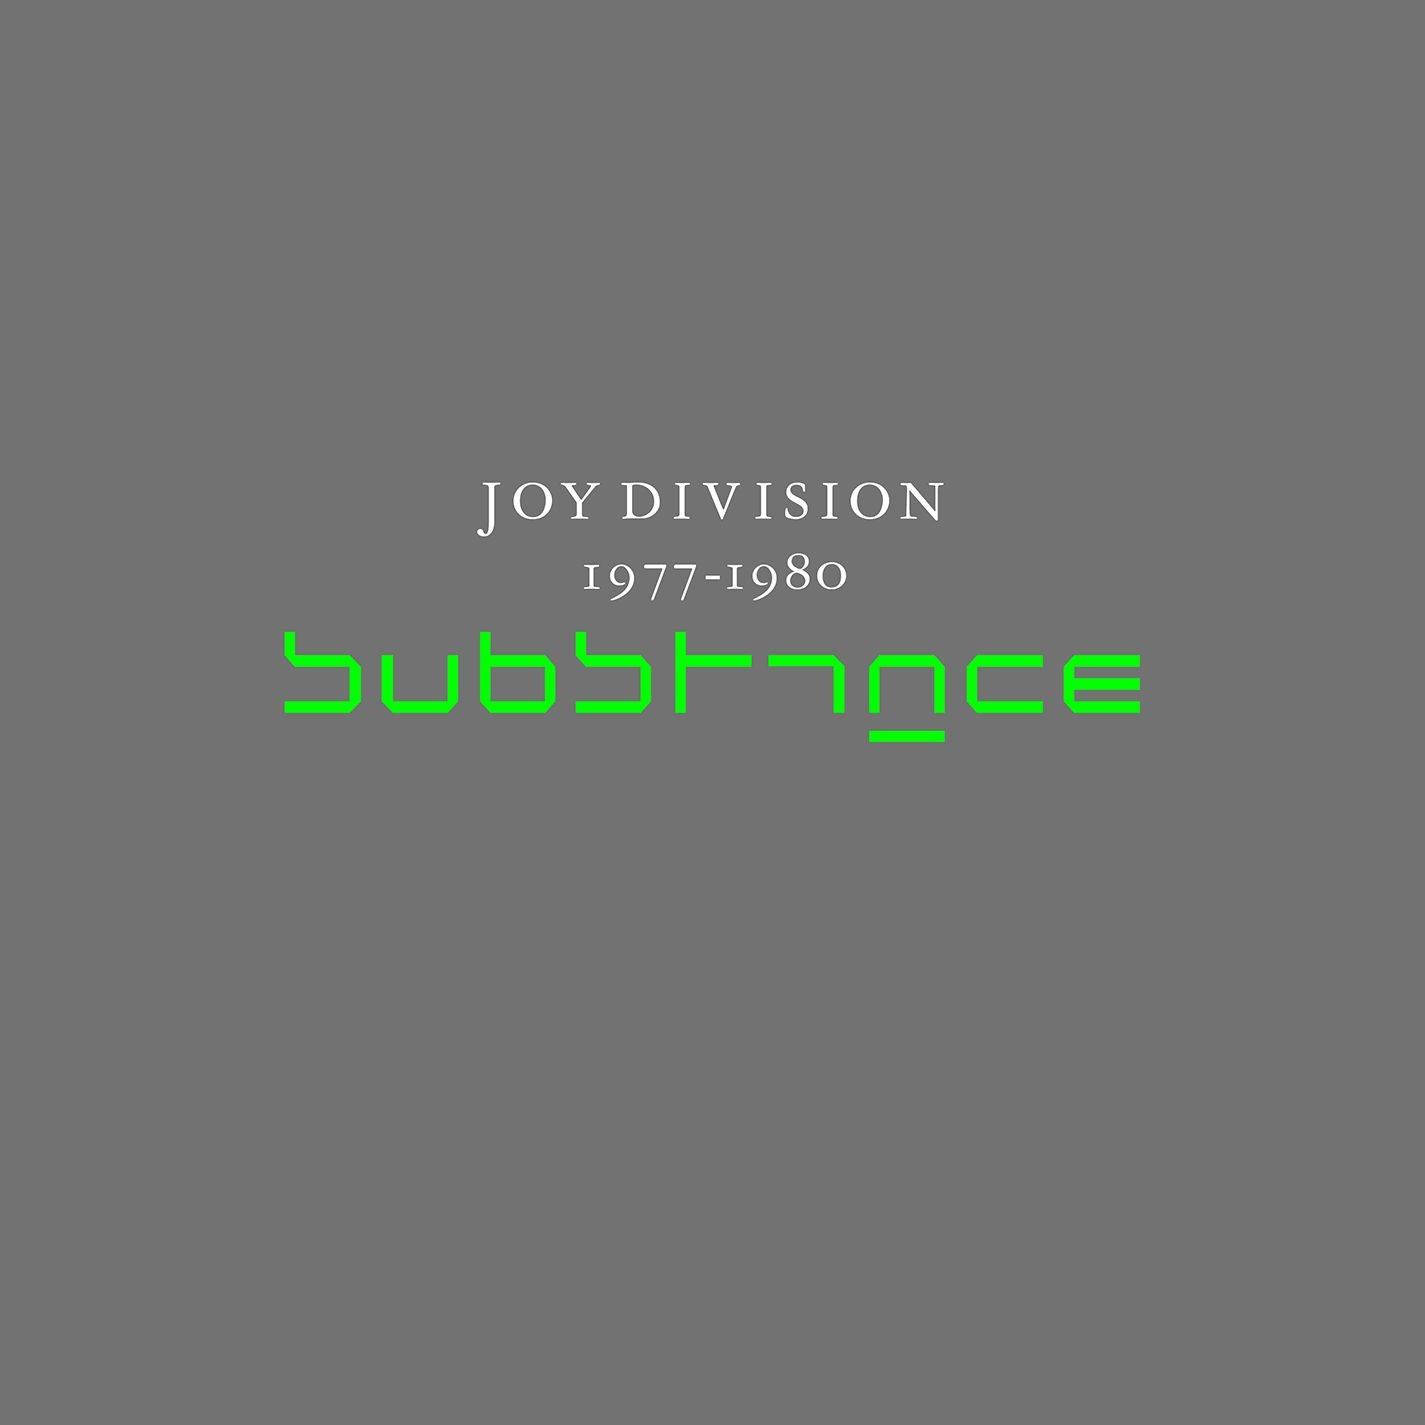 Capa do álbum “Substance”, do Joy Division.